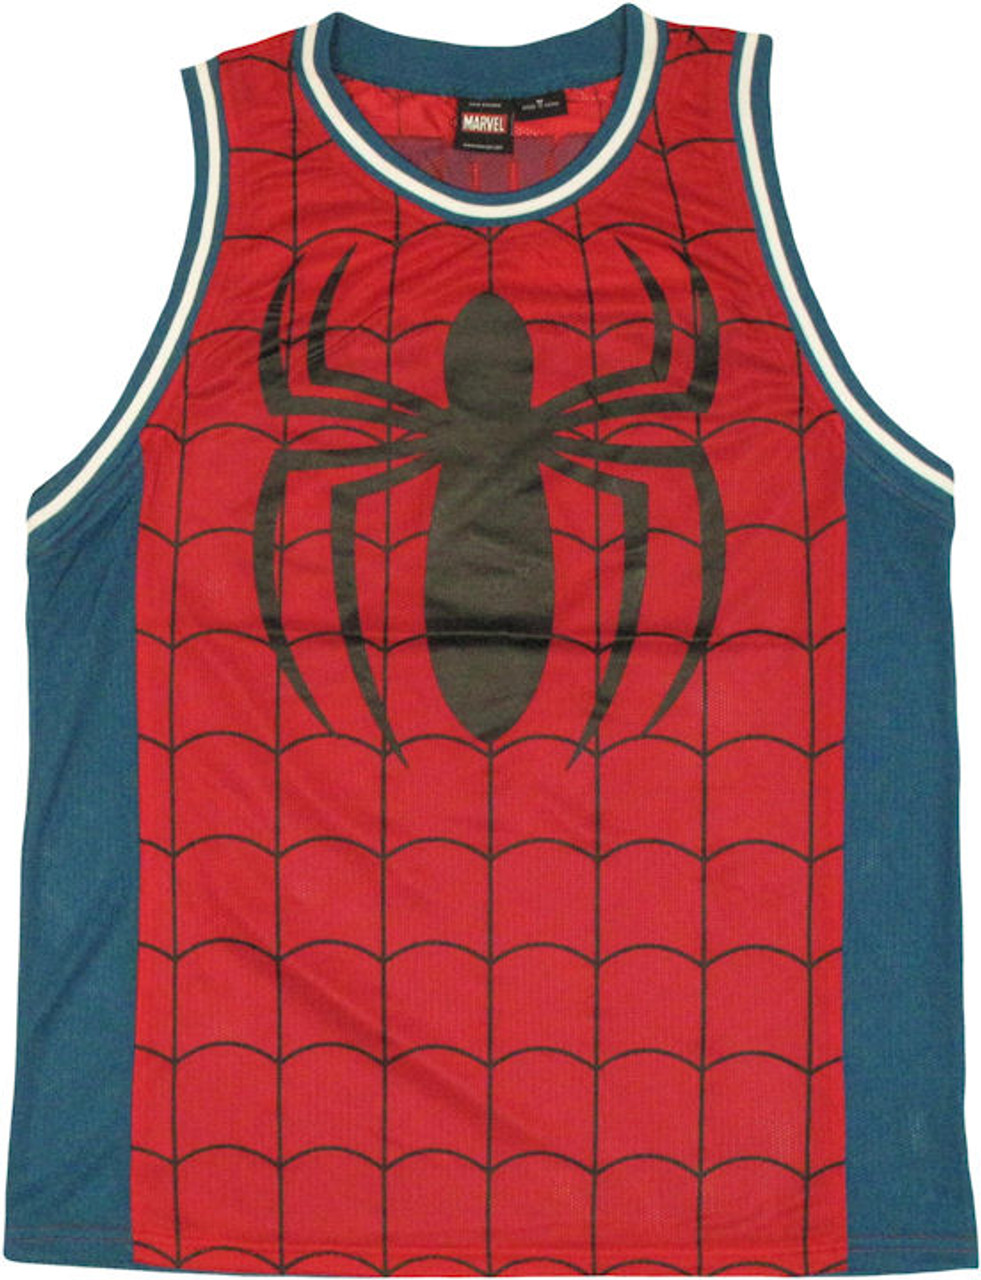 Spiderman Basketball Jersey